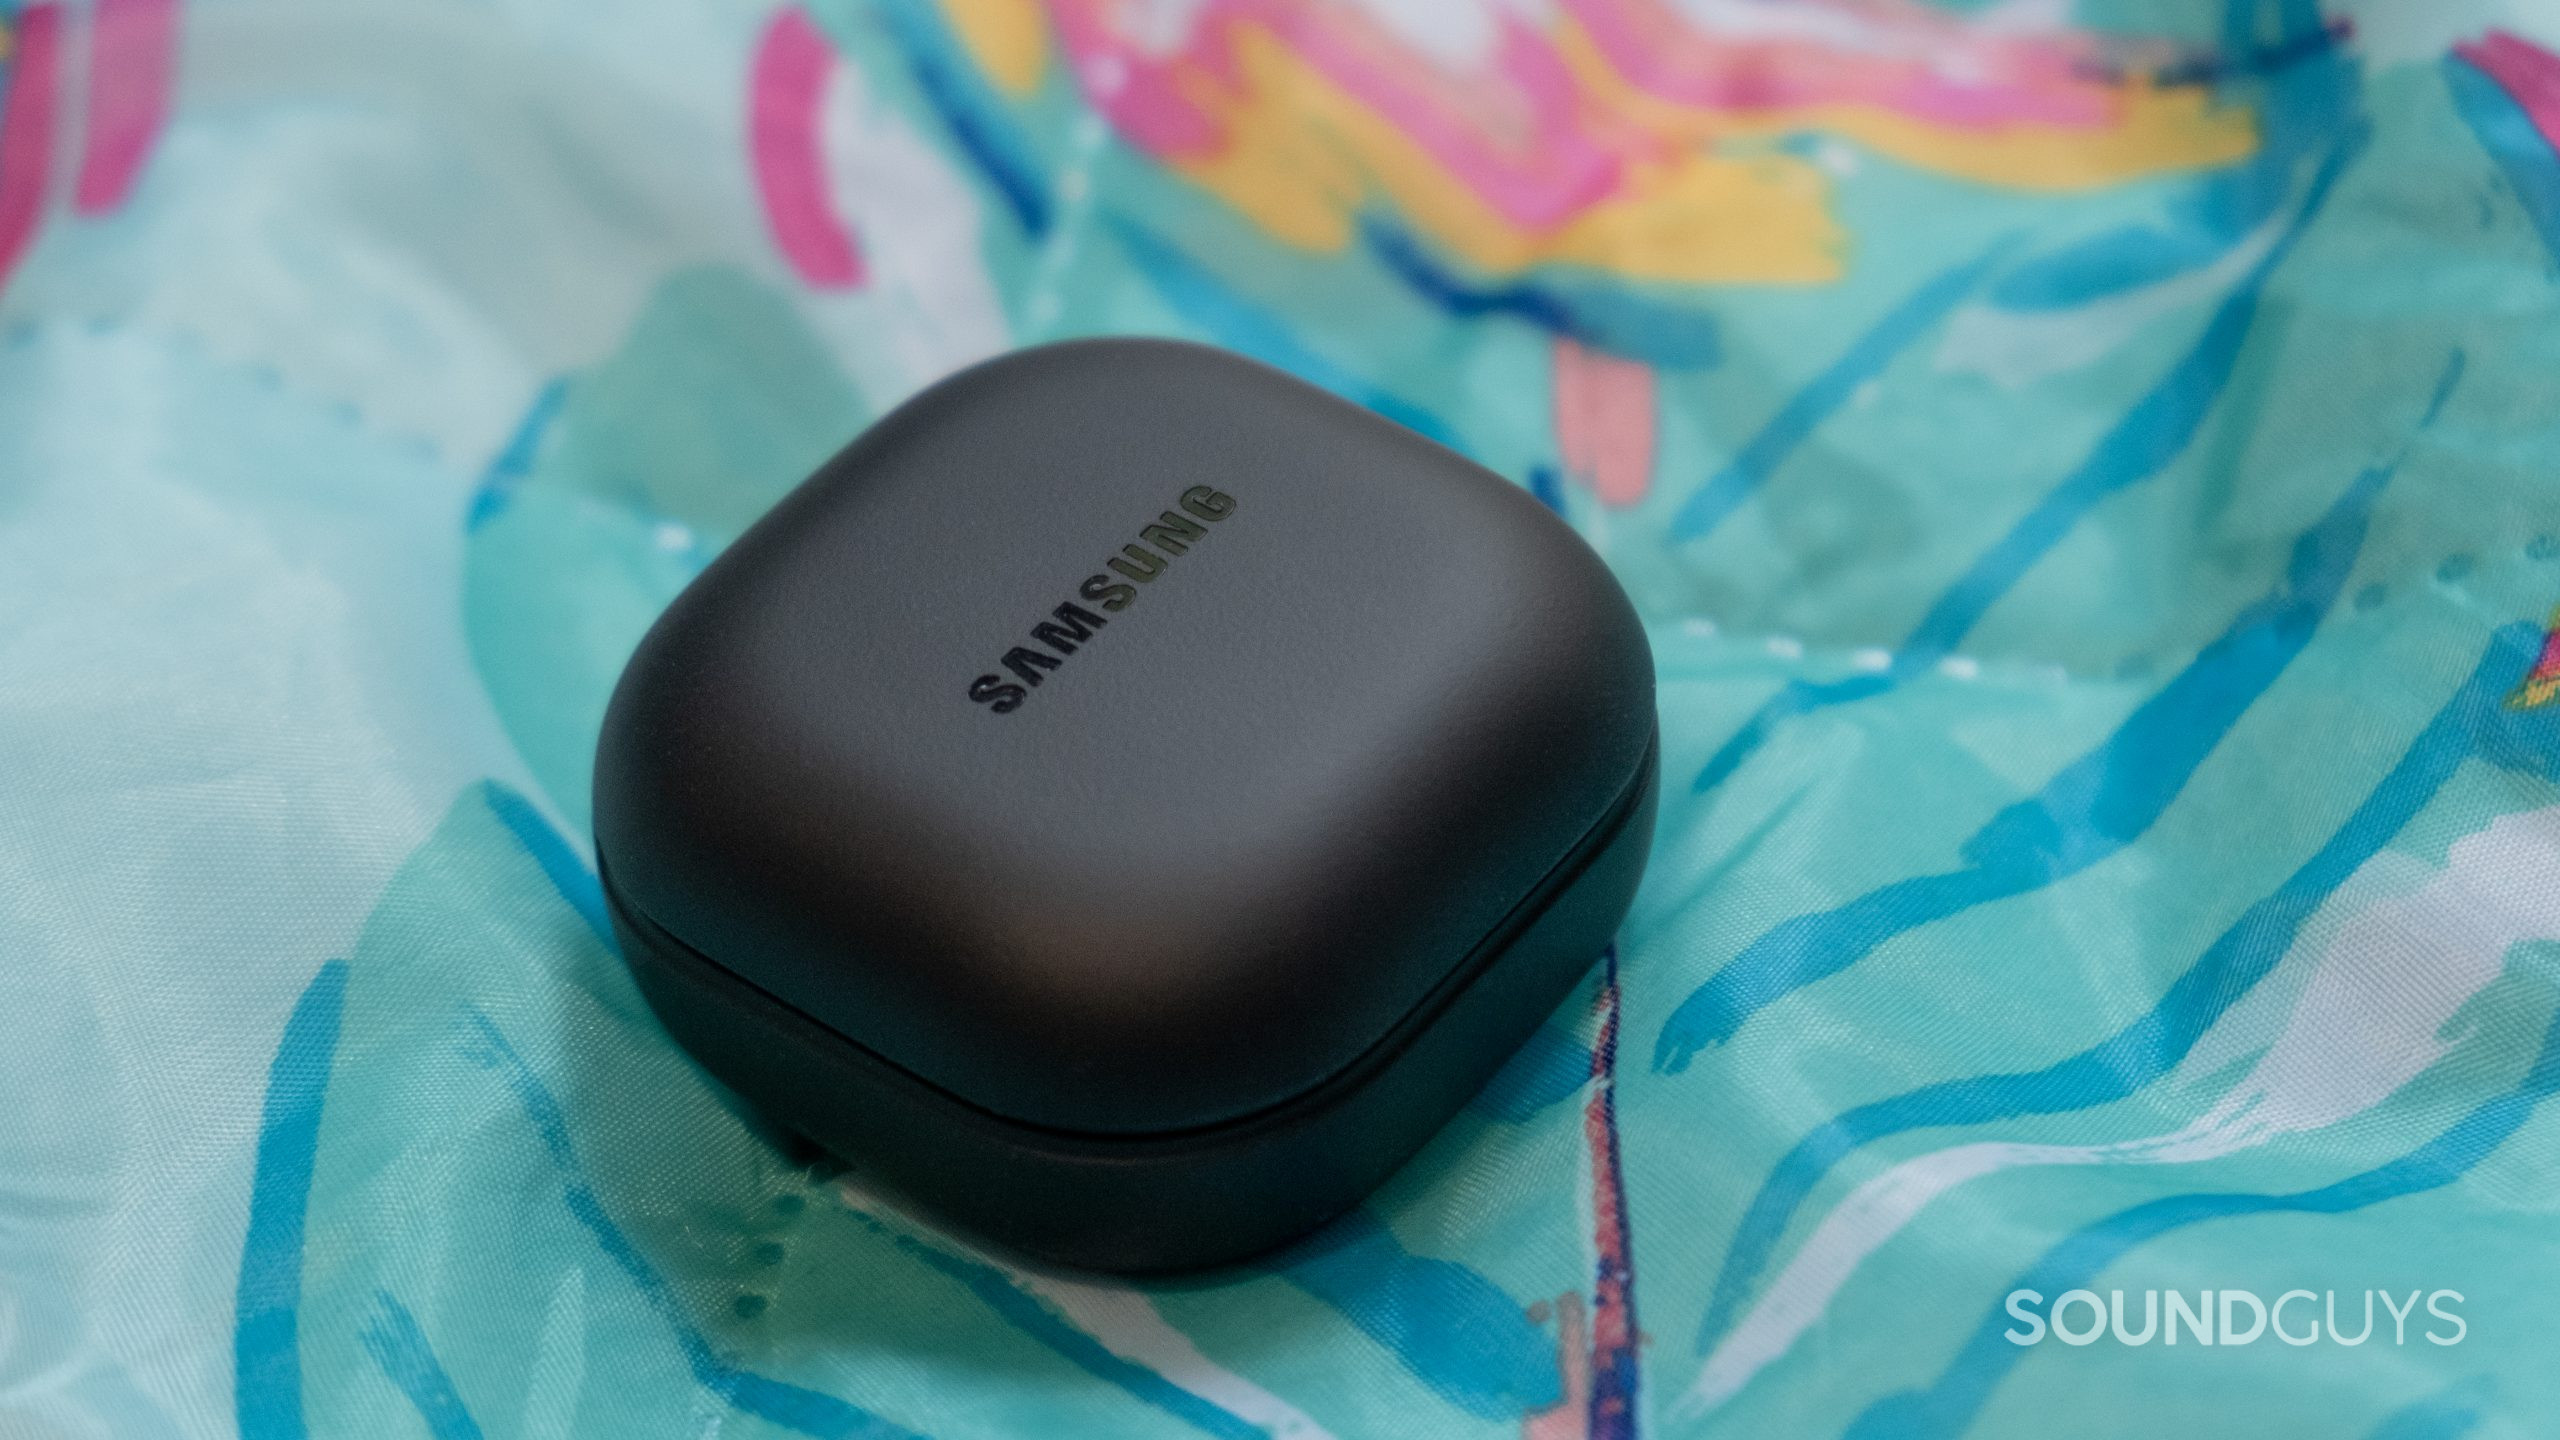 Galaxy review - Pro SoundGuys 2 Samsung Buds